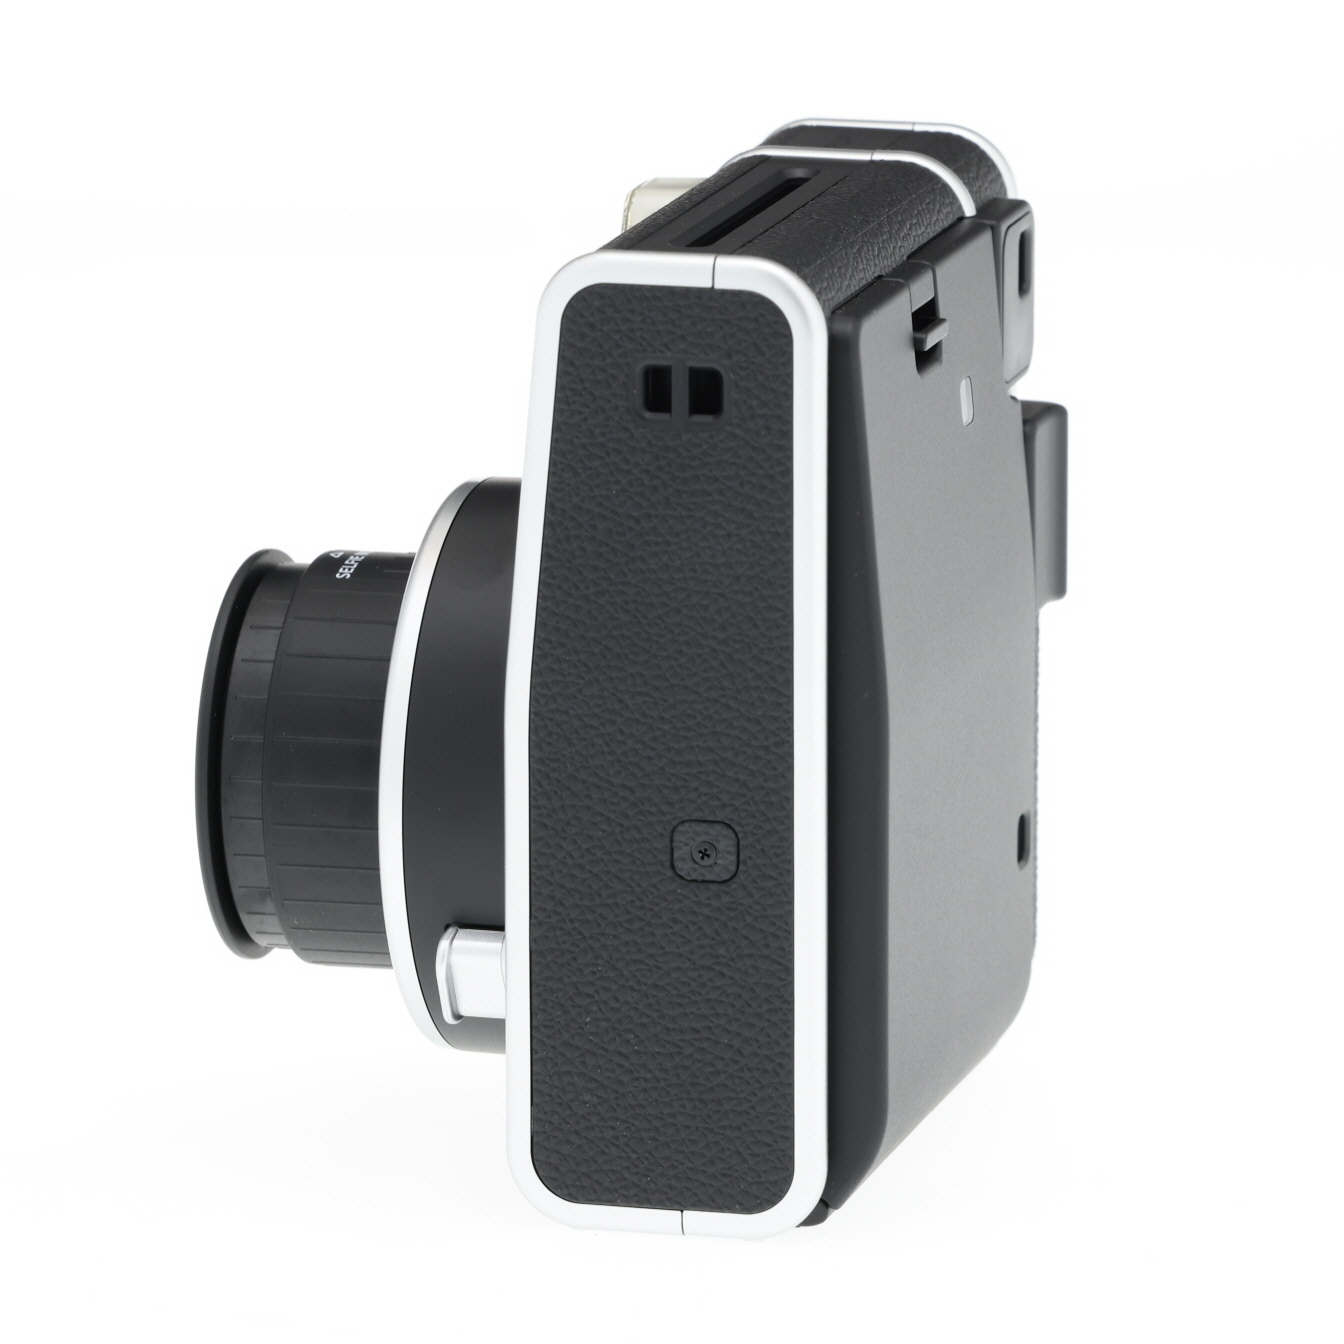 Fujifilm Instax Mini 40 Camera Blister Bundle with Bonus Film (10-pack of  film) 